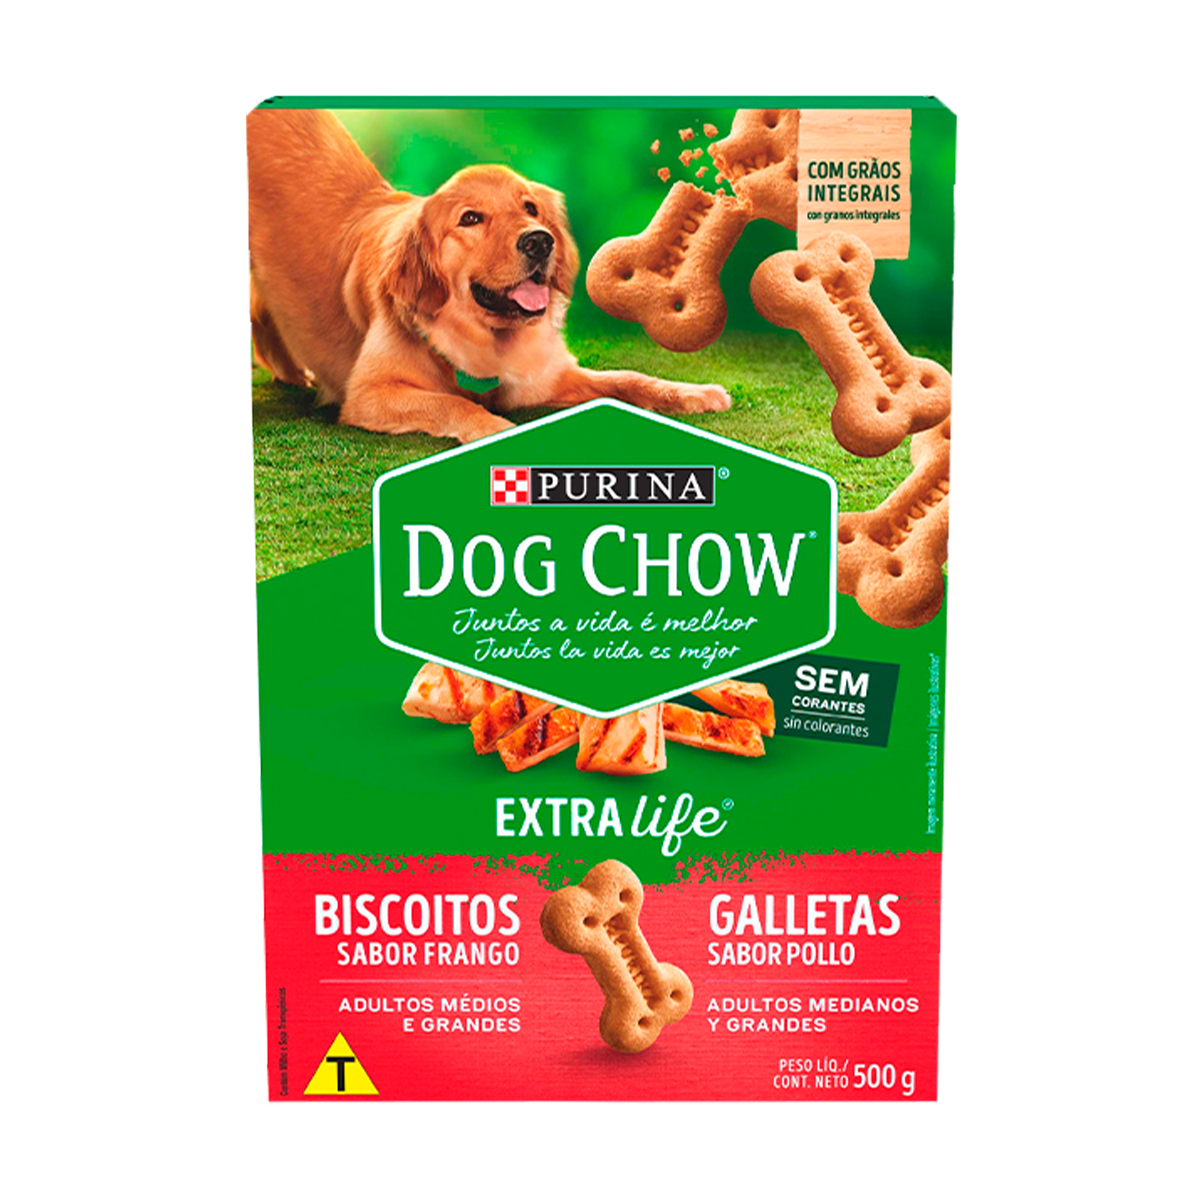 purina-dog-chow-galletas-sabor-frango-adultos-medios.png